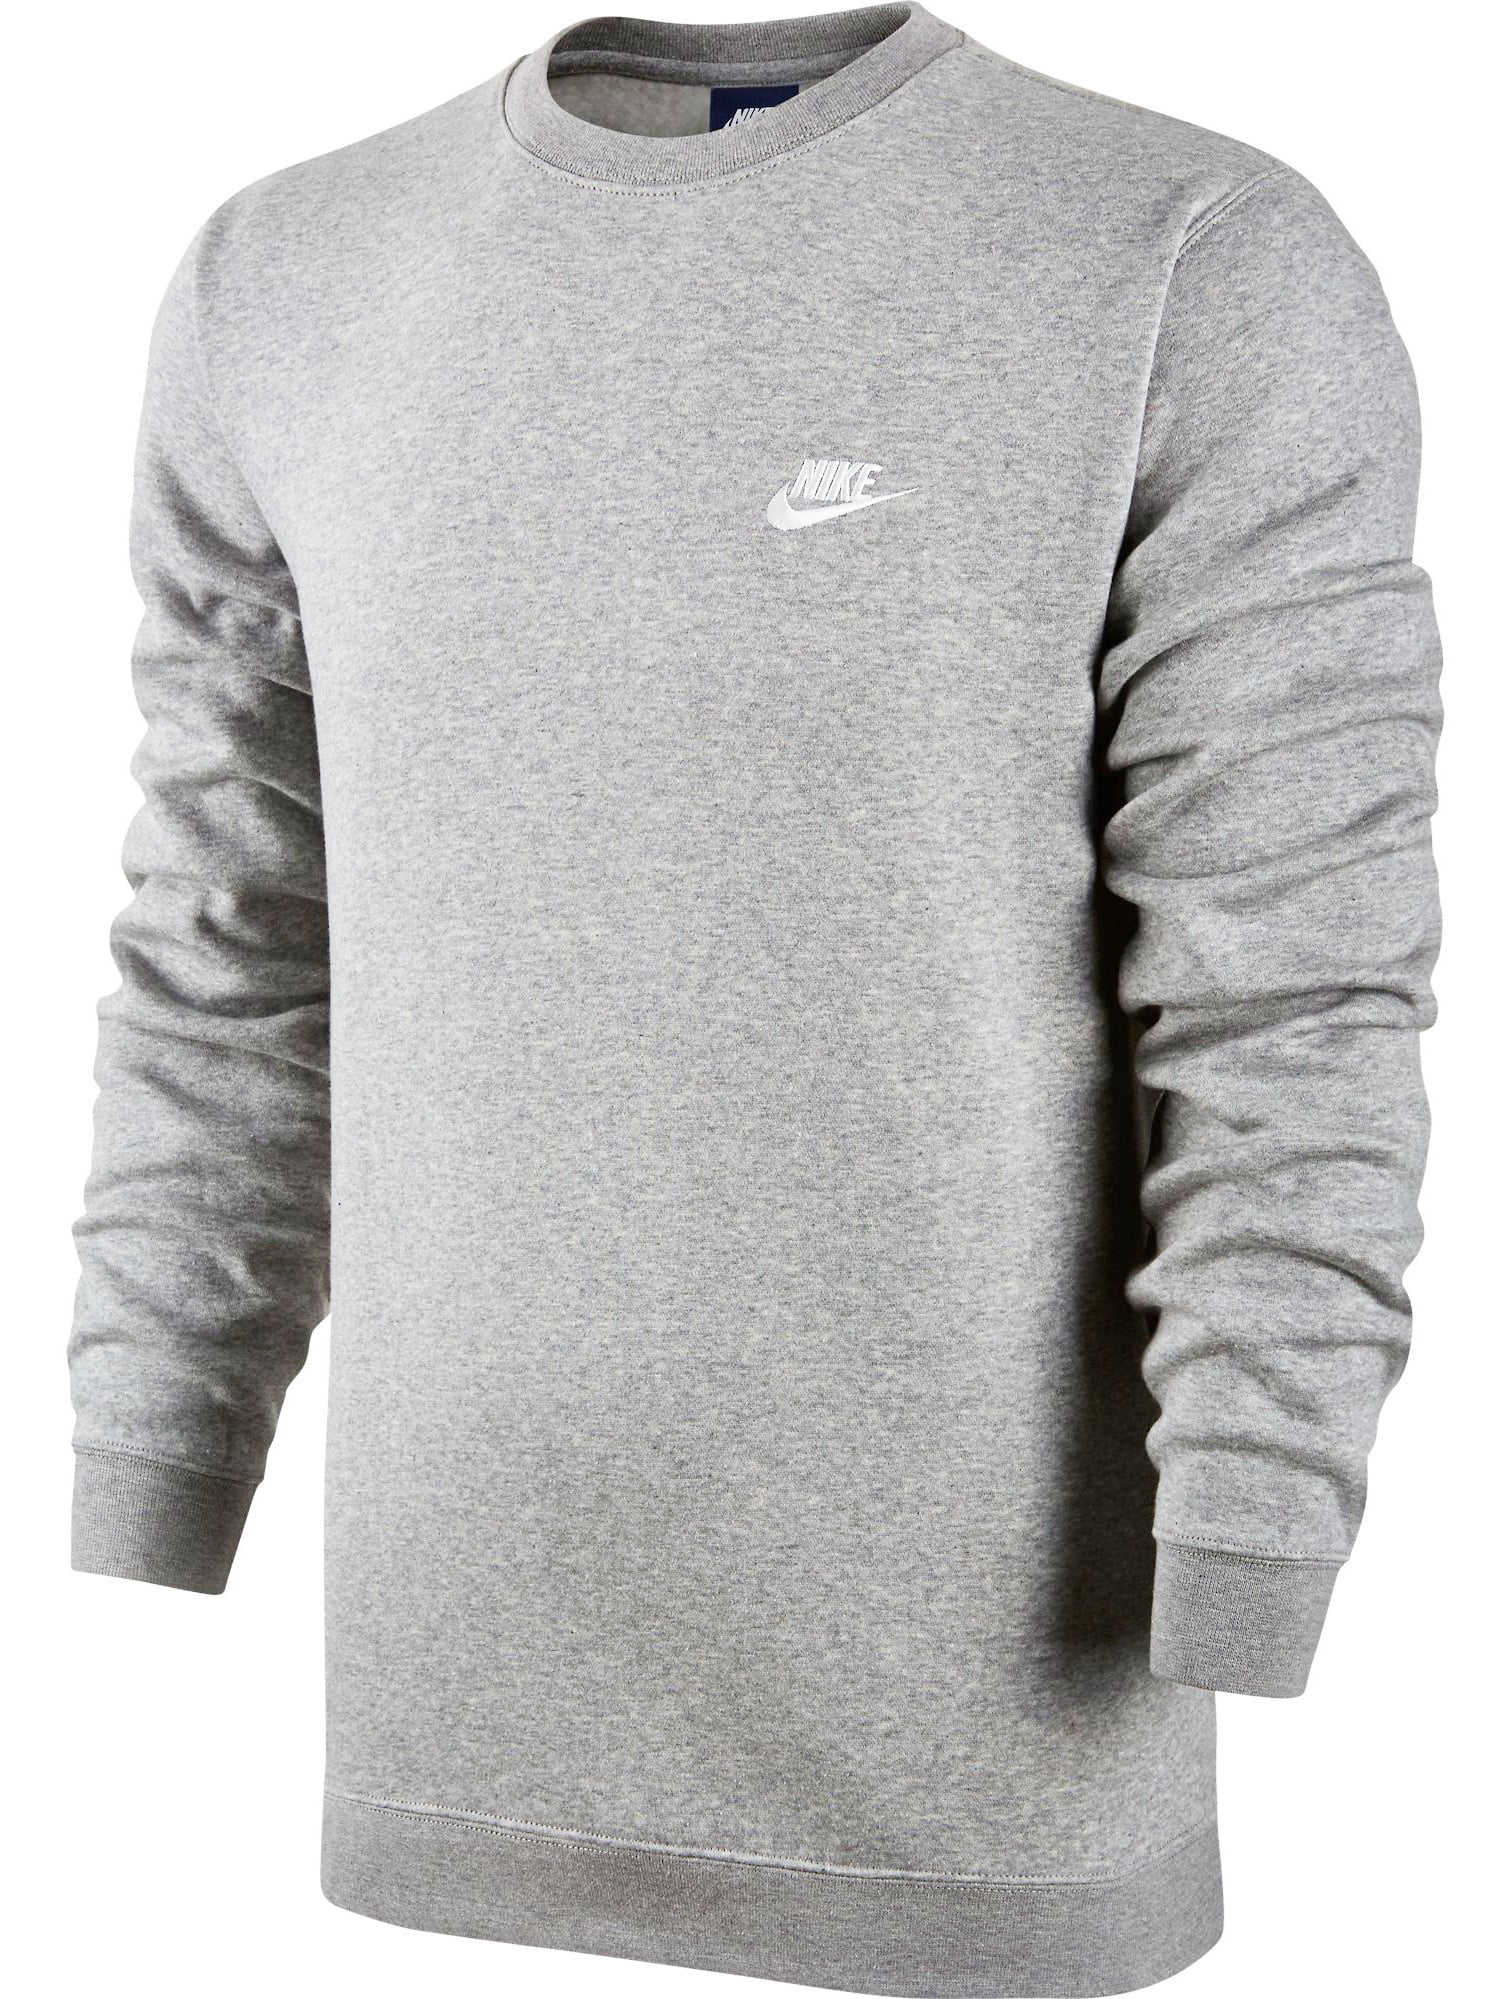 Nike - Nike Club Fleece Crew Neck Men's T-Shirt Grey Heather/White